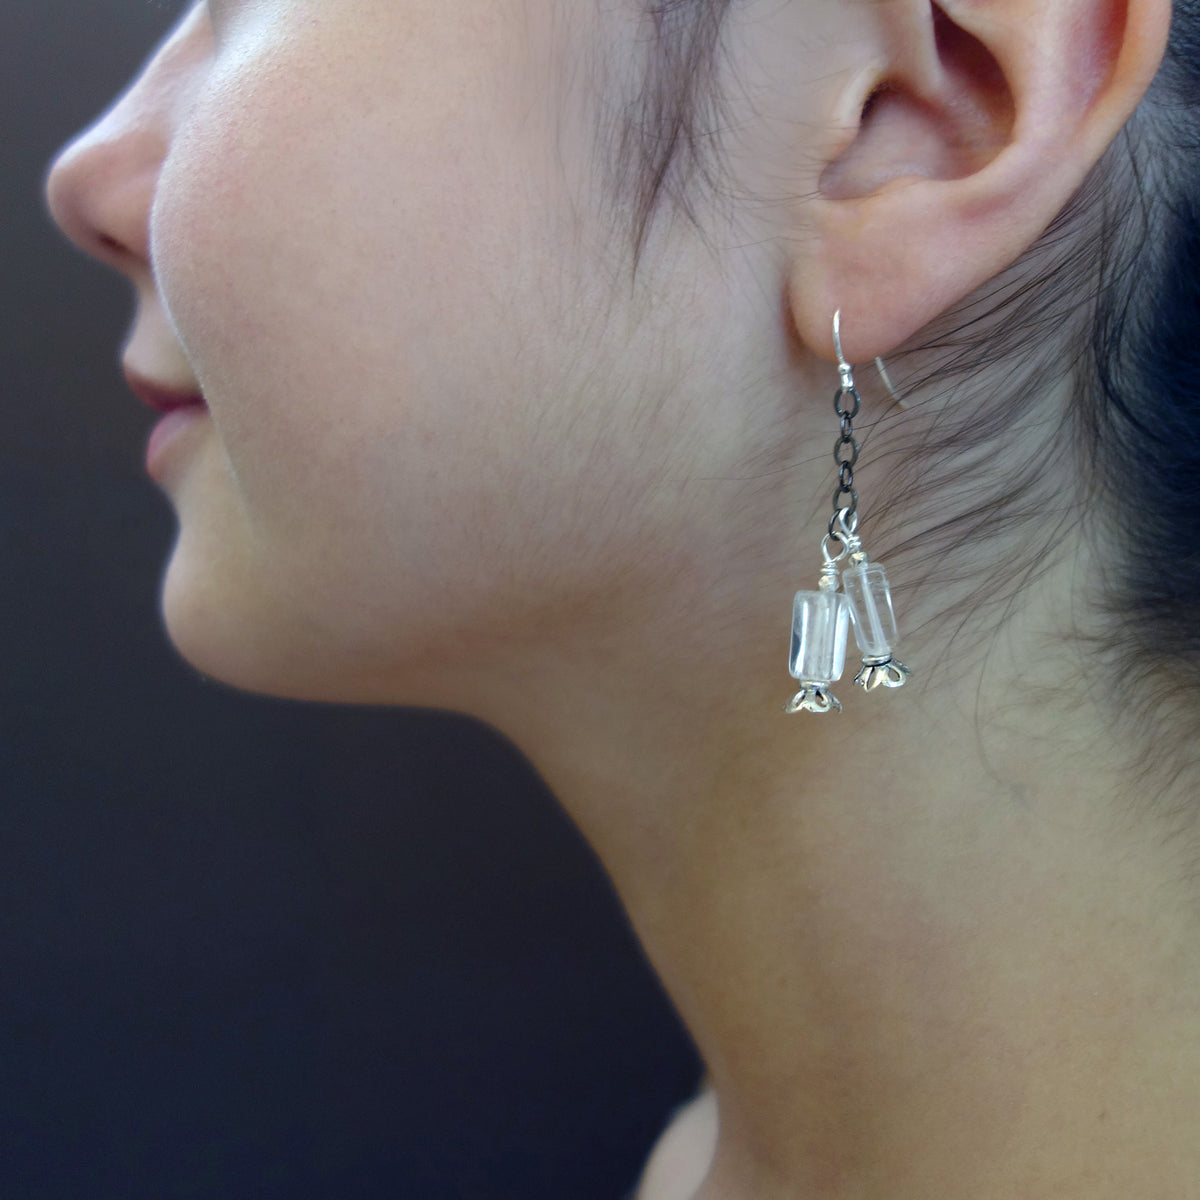 Rock On Crystal Girl earrings